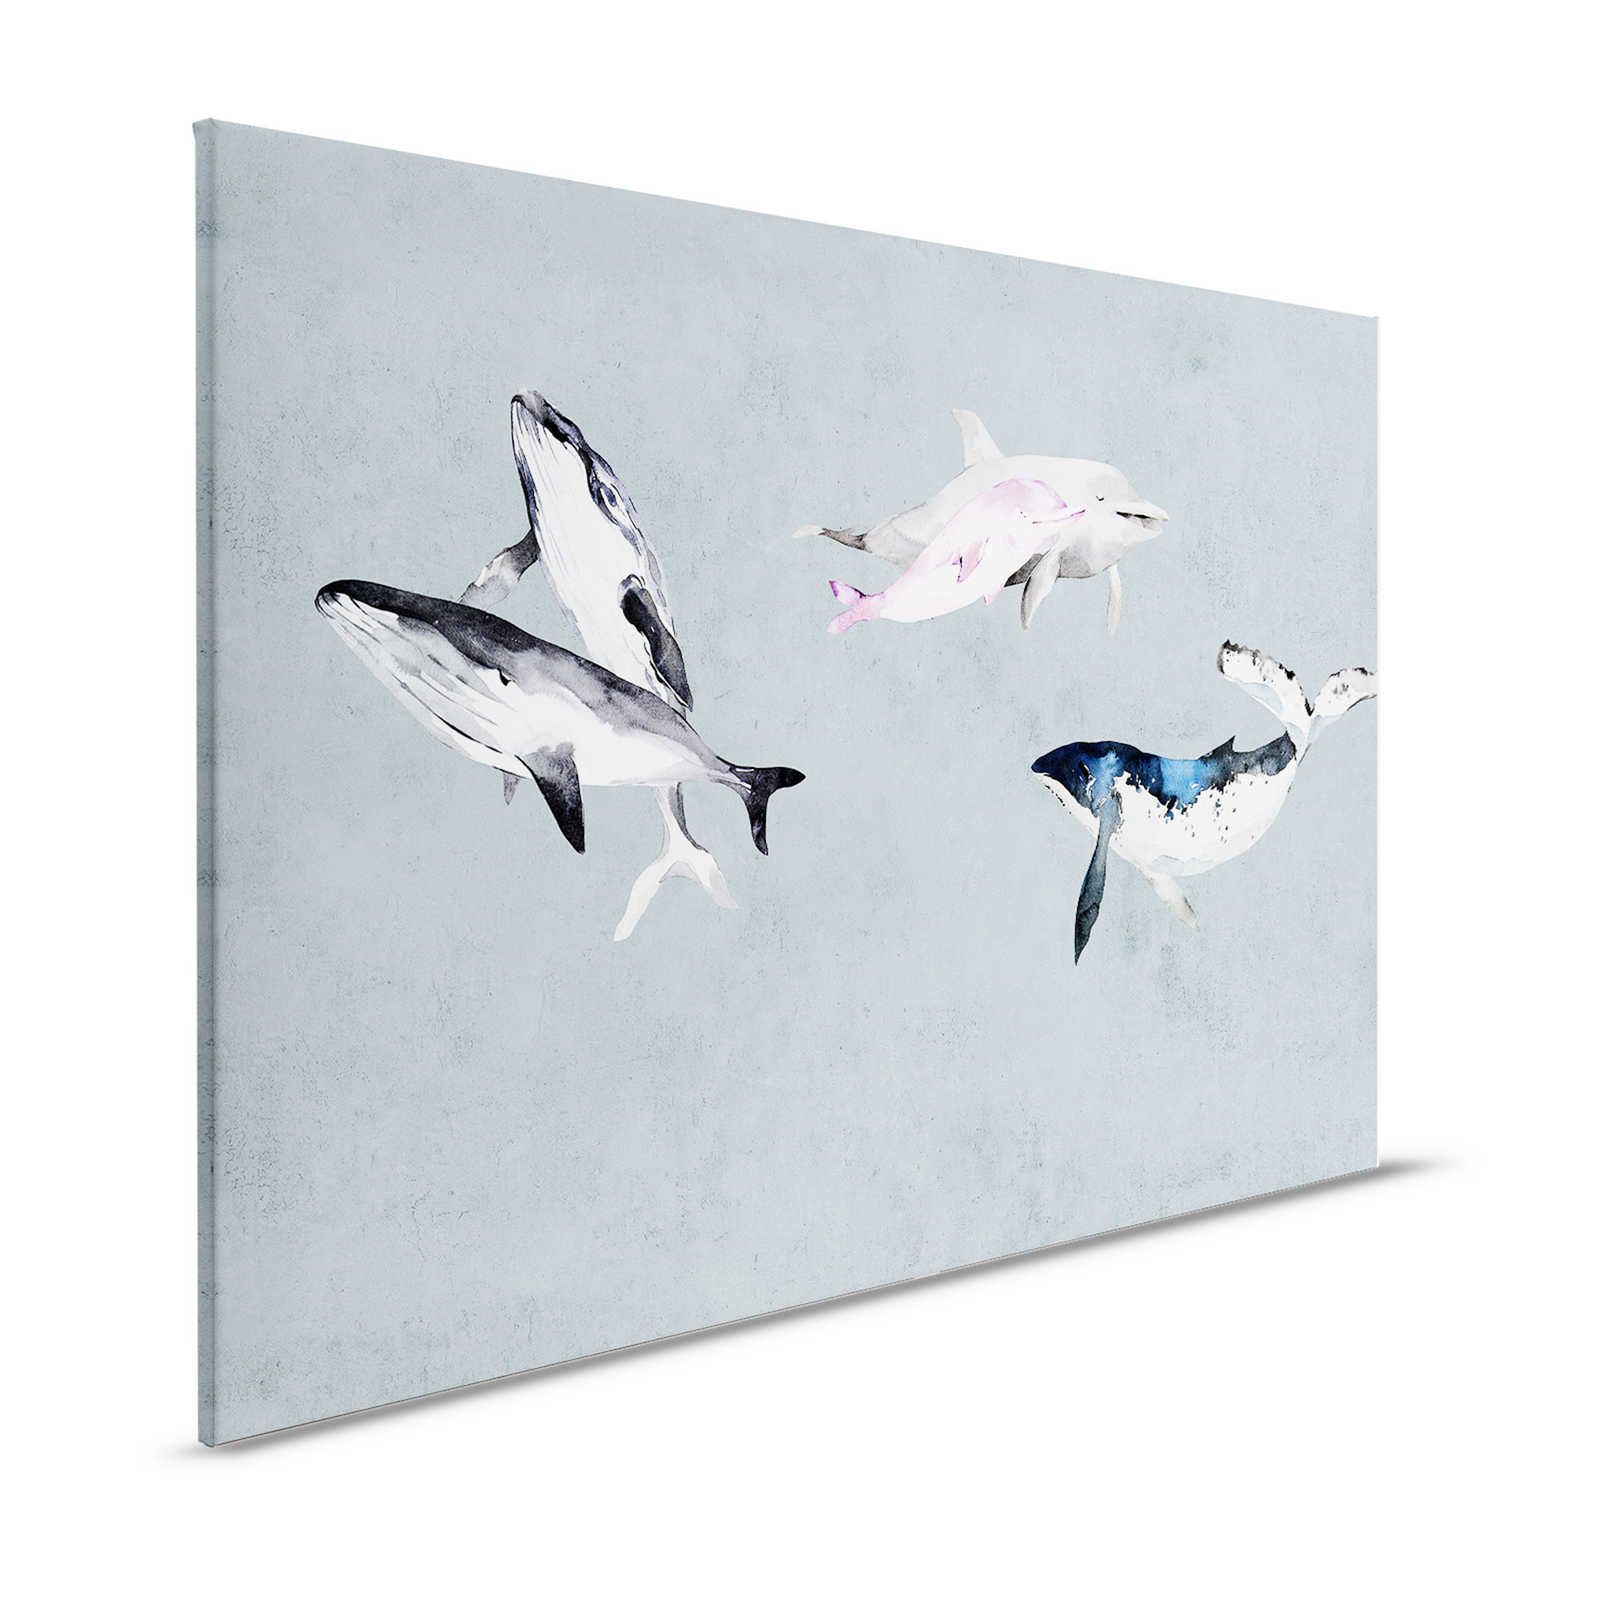 Oceans Five 1 - Tela dipinta in stile acquerello con balene e delfini - 1,20 m x 0,80 m
